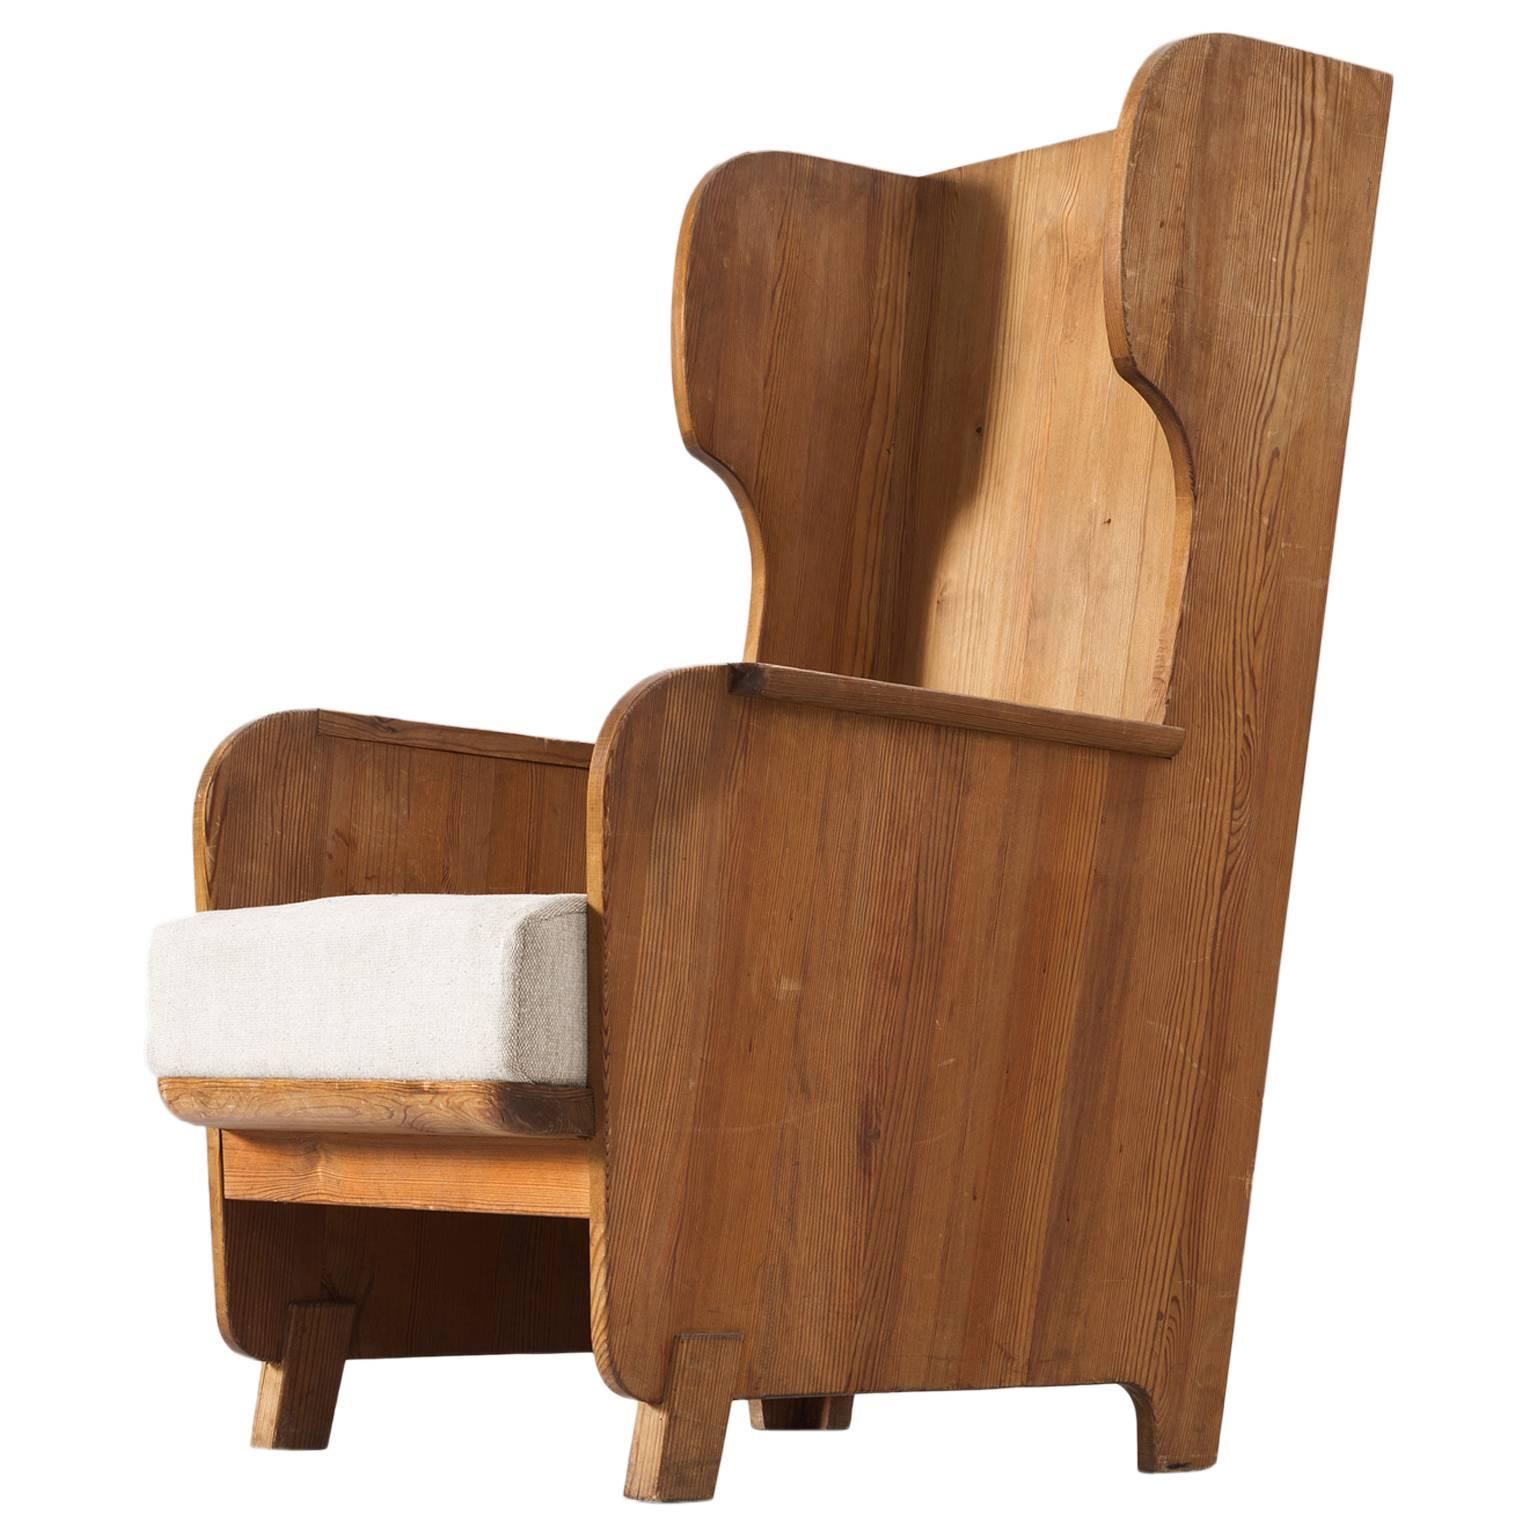 Axel Einar Hjorth 'Lovö' High Back Chair in Solid Pine